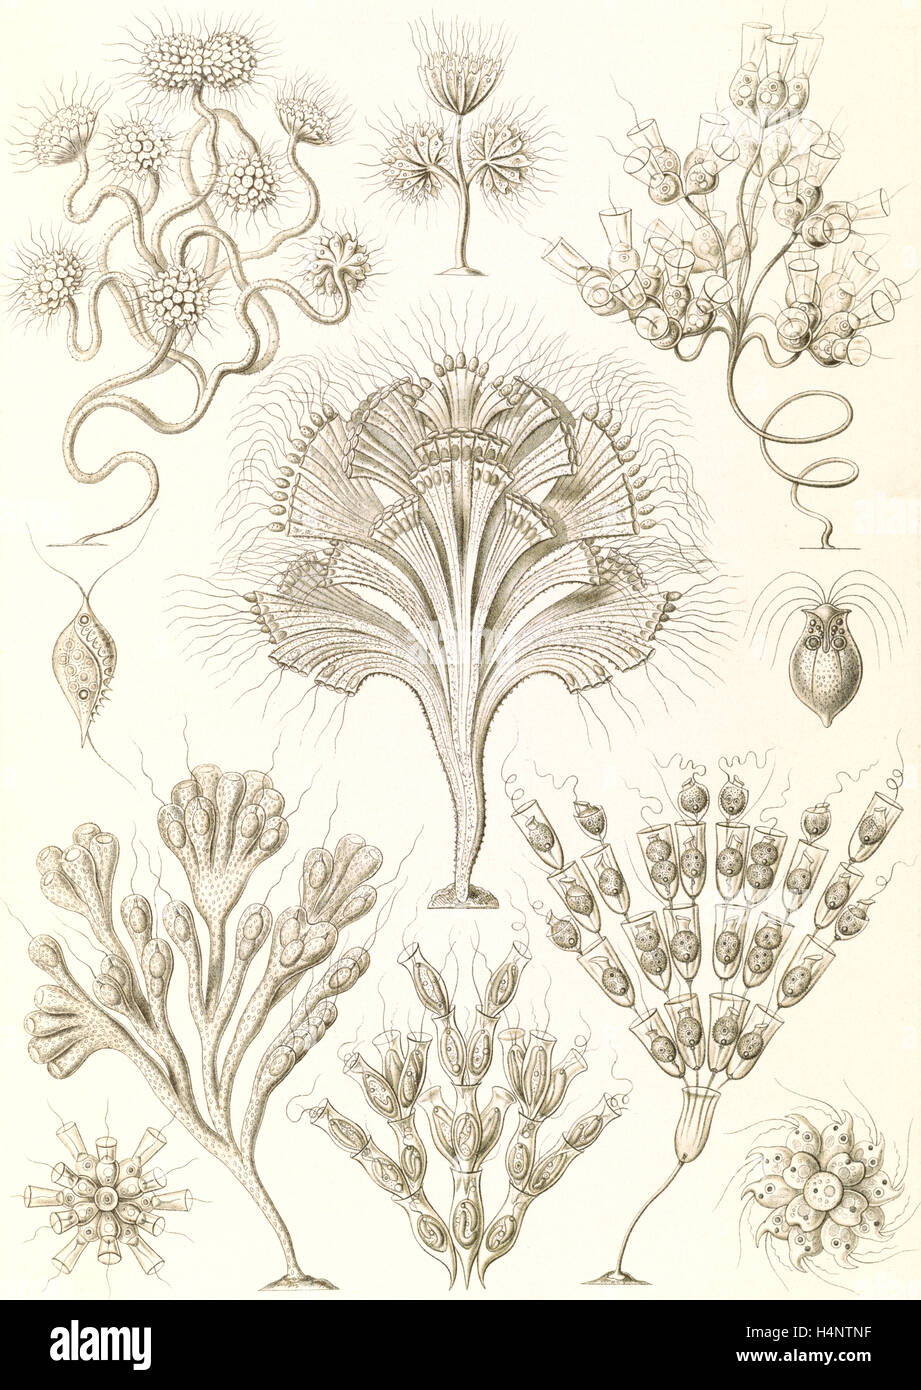 La figura mostra i microrganismi. Flagellata. - Geiklinge, 1 stampa : Litografia ; foglio 36 x 26 cm., 1904. Ernst Haeckel Foto Stock